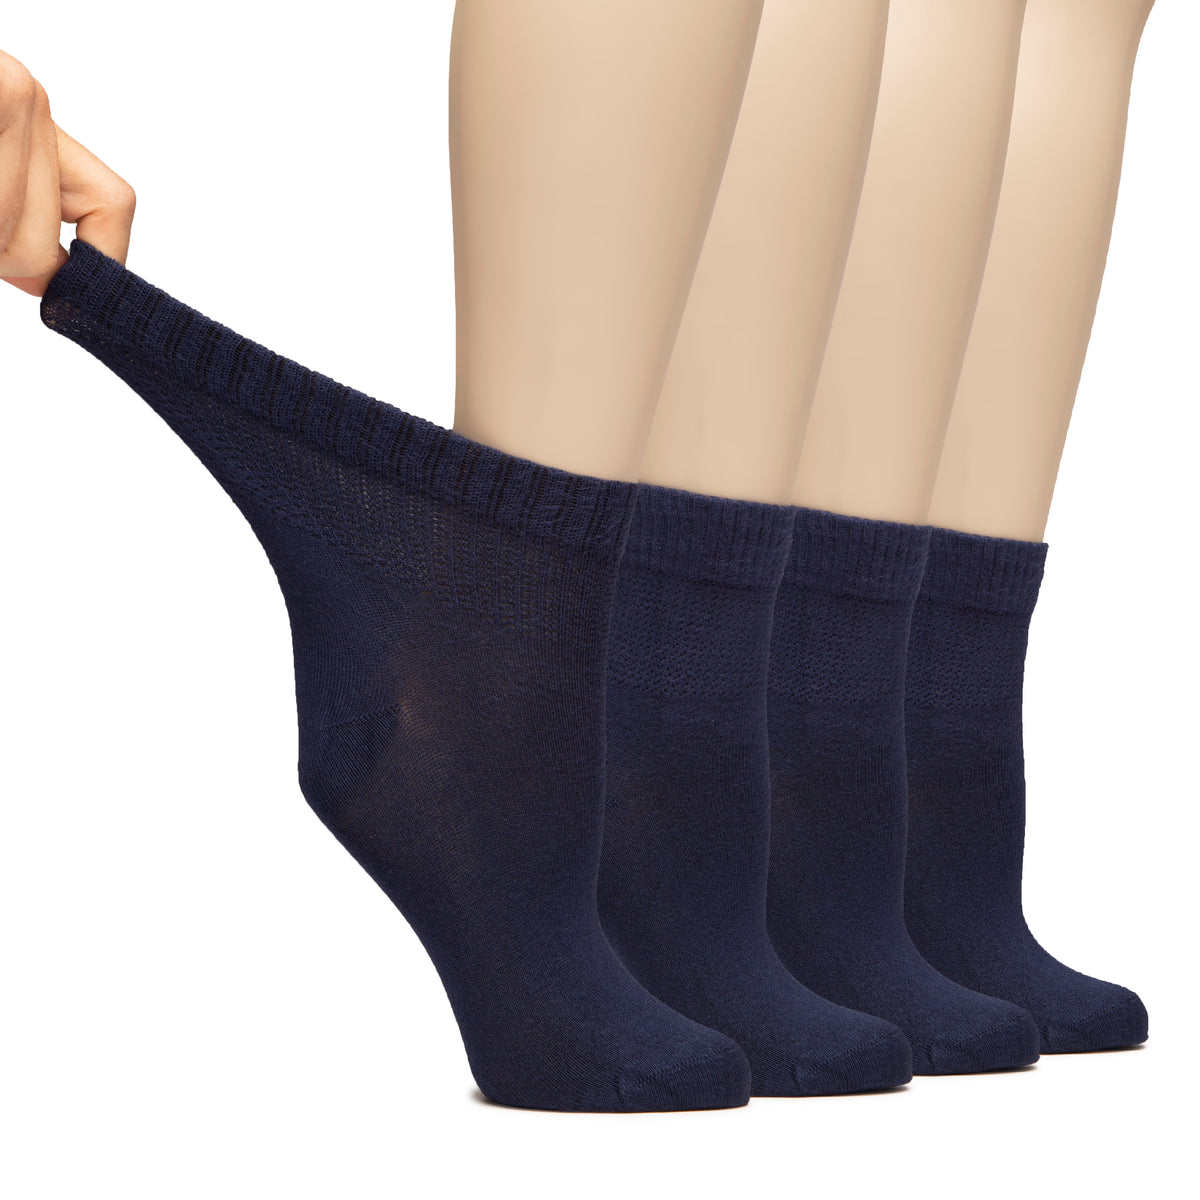 Hugh Ugoli Lightweight Women's Diabetic Ankle Socks Bamboo Thin Socks Seamless Toe and Non-Binding Top, 4 Pairs, , Shoe Size: 6-9/10-12 | Shoe Size: 10-12 | Navy Blue